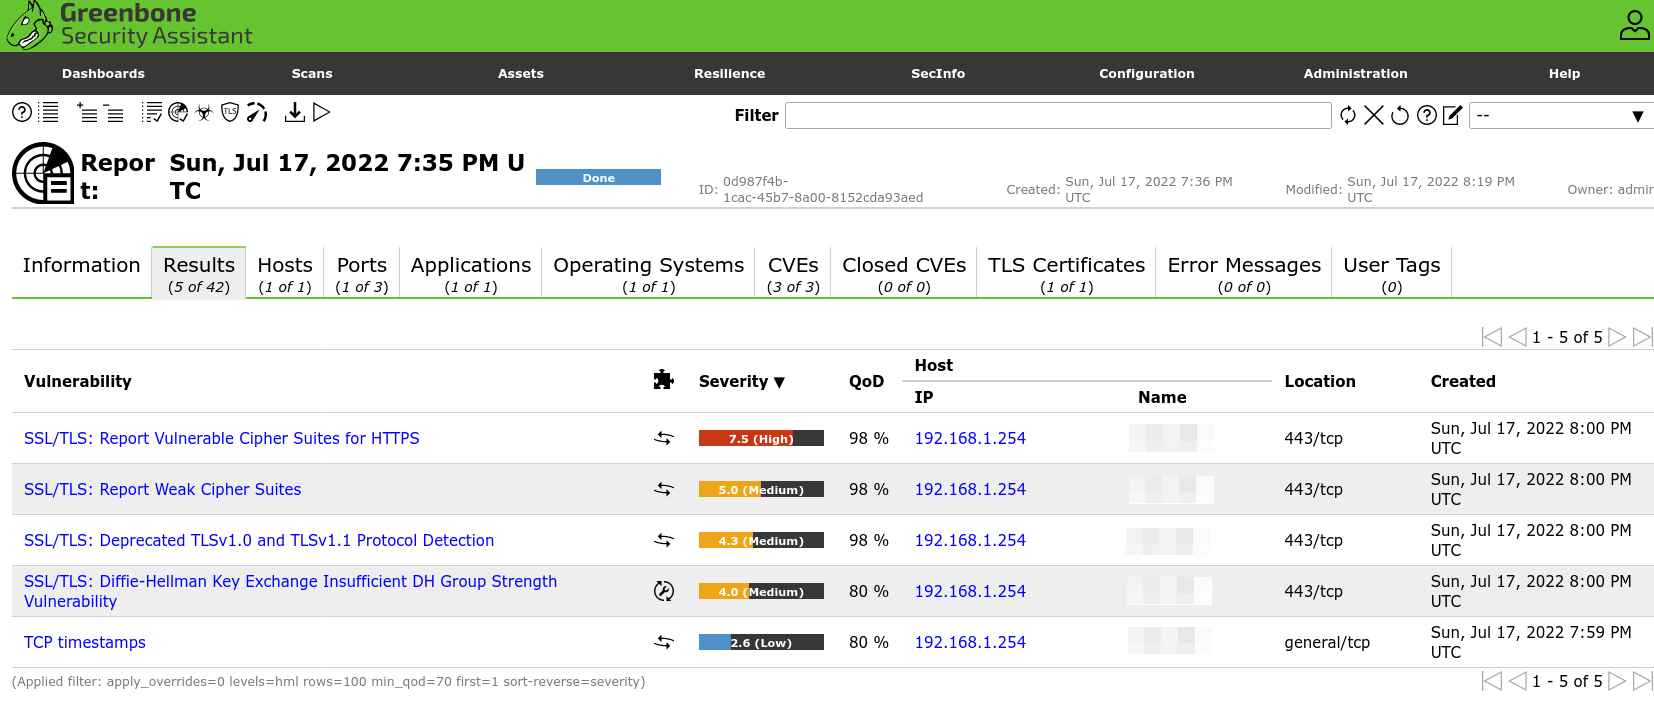 Kali Linux | Greenbone Vulnerability Manager, vulnerabilities report